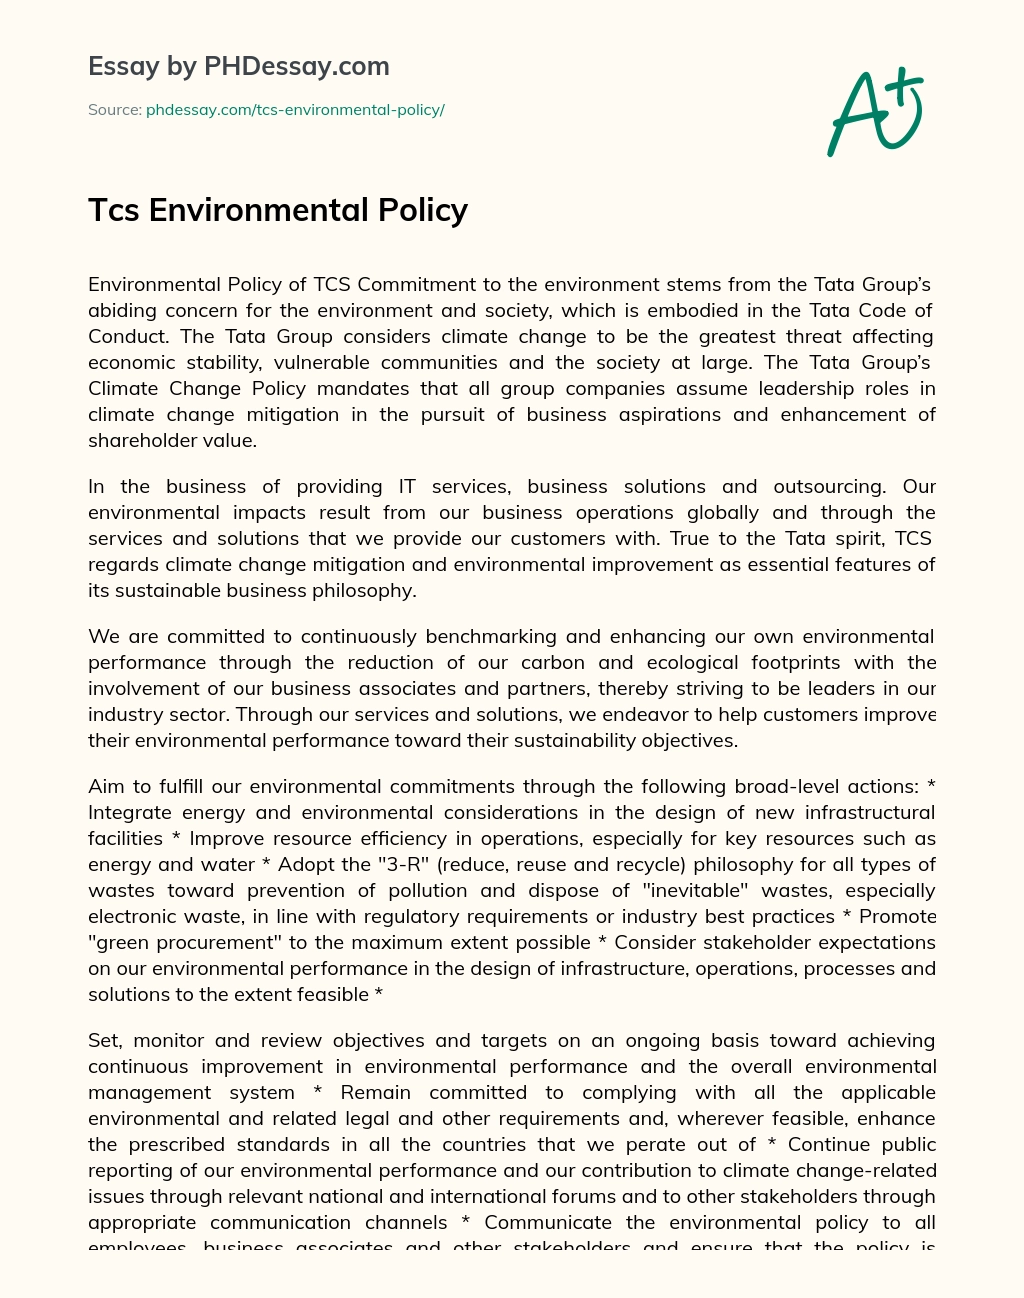 Tcs Environmental Policy essay